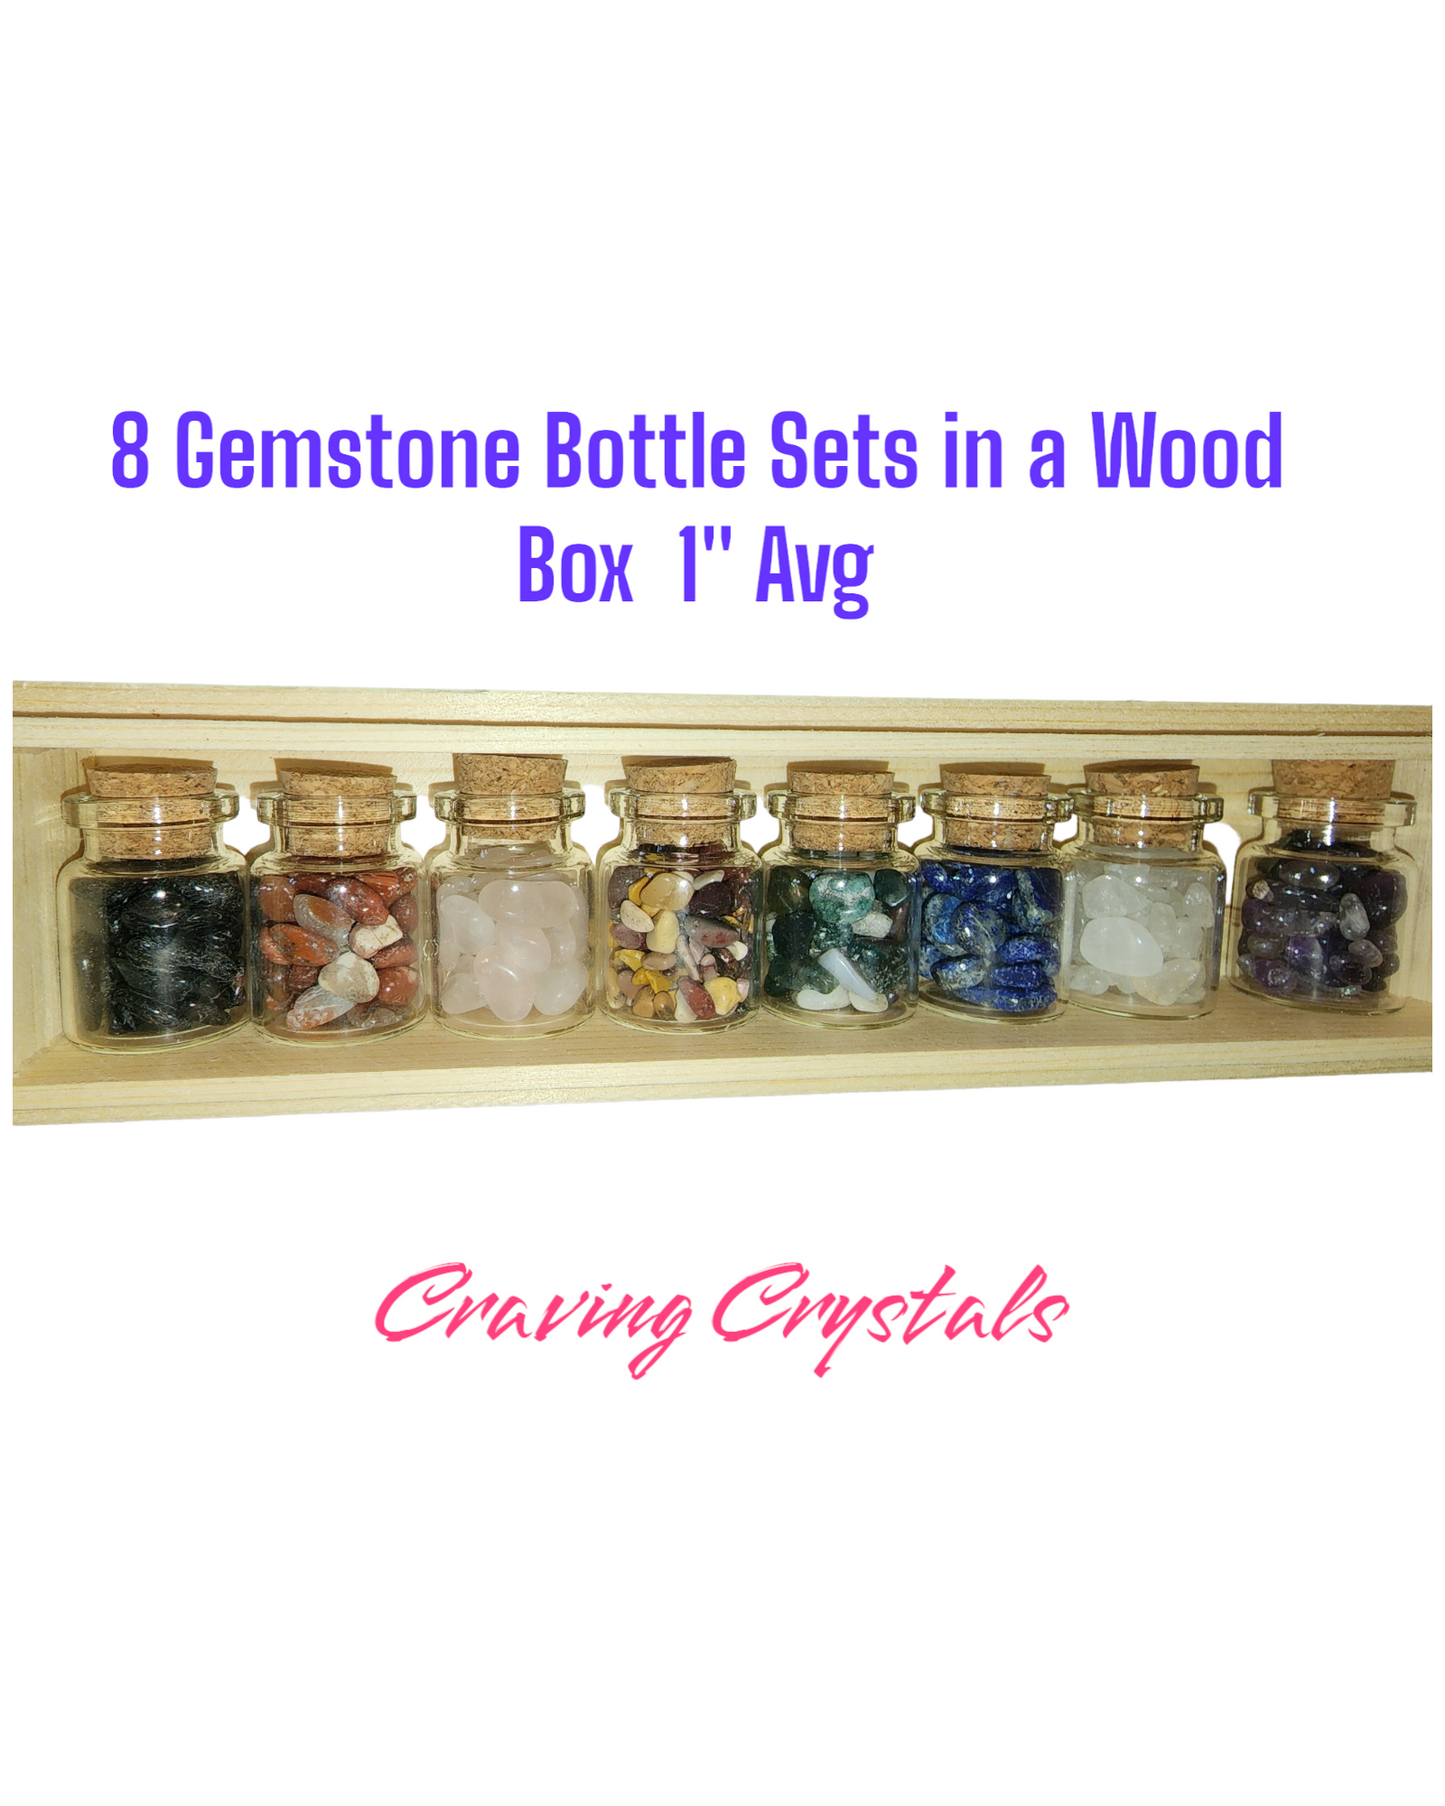 8 gemstone bottle sets in a wooden box 1 inch average